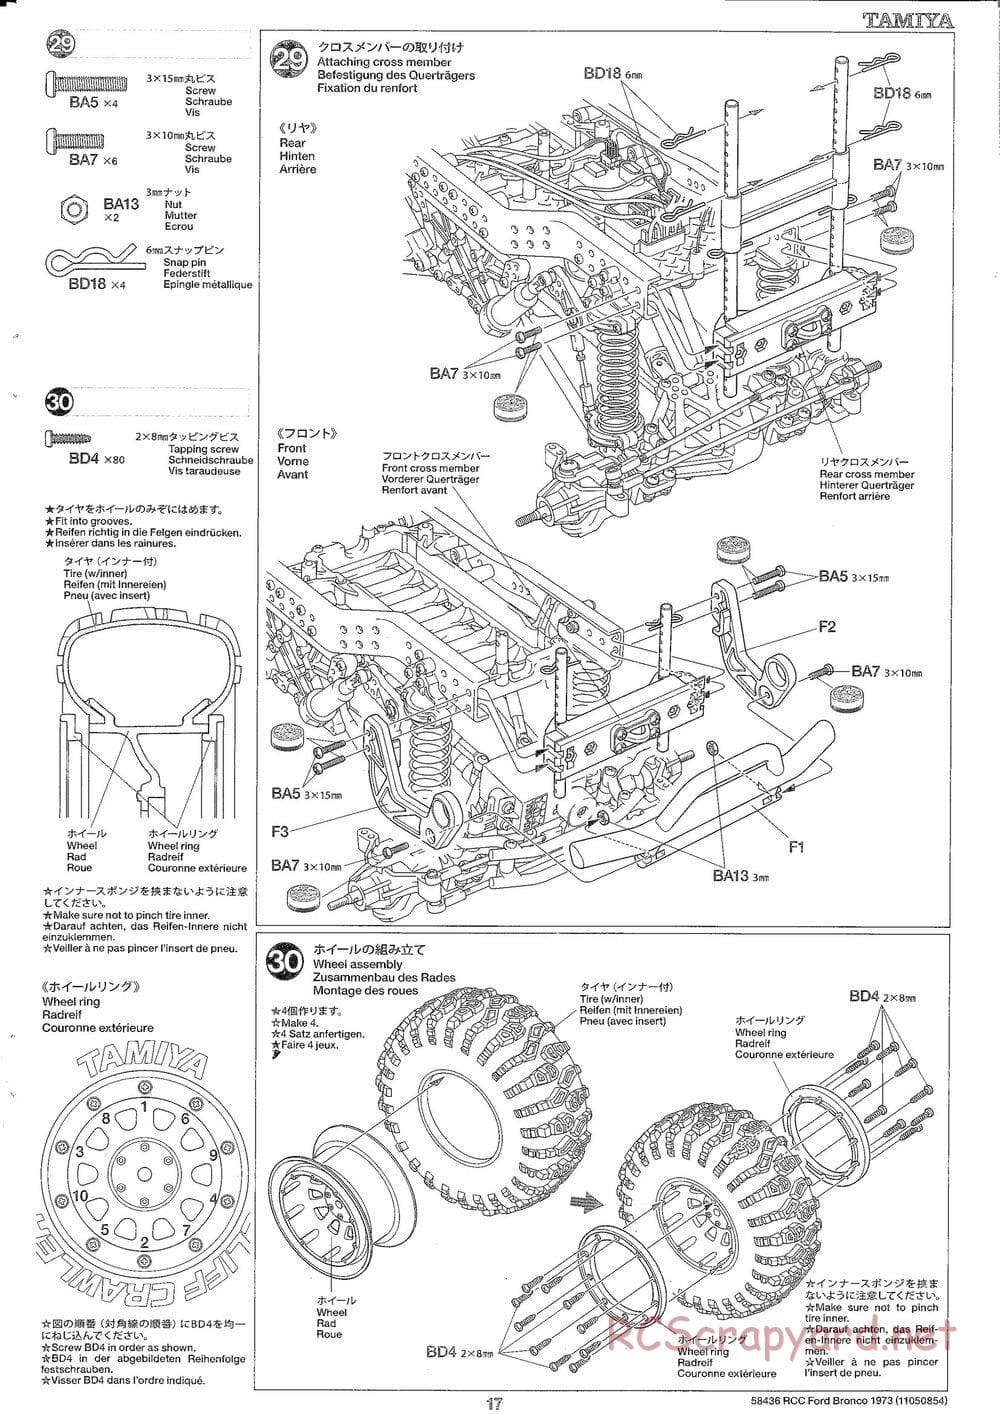 Tamiya - Ford Bronco 1973 - CR-01 Chassis - Manual - Page 17